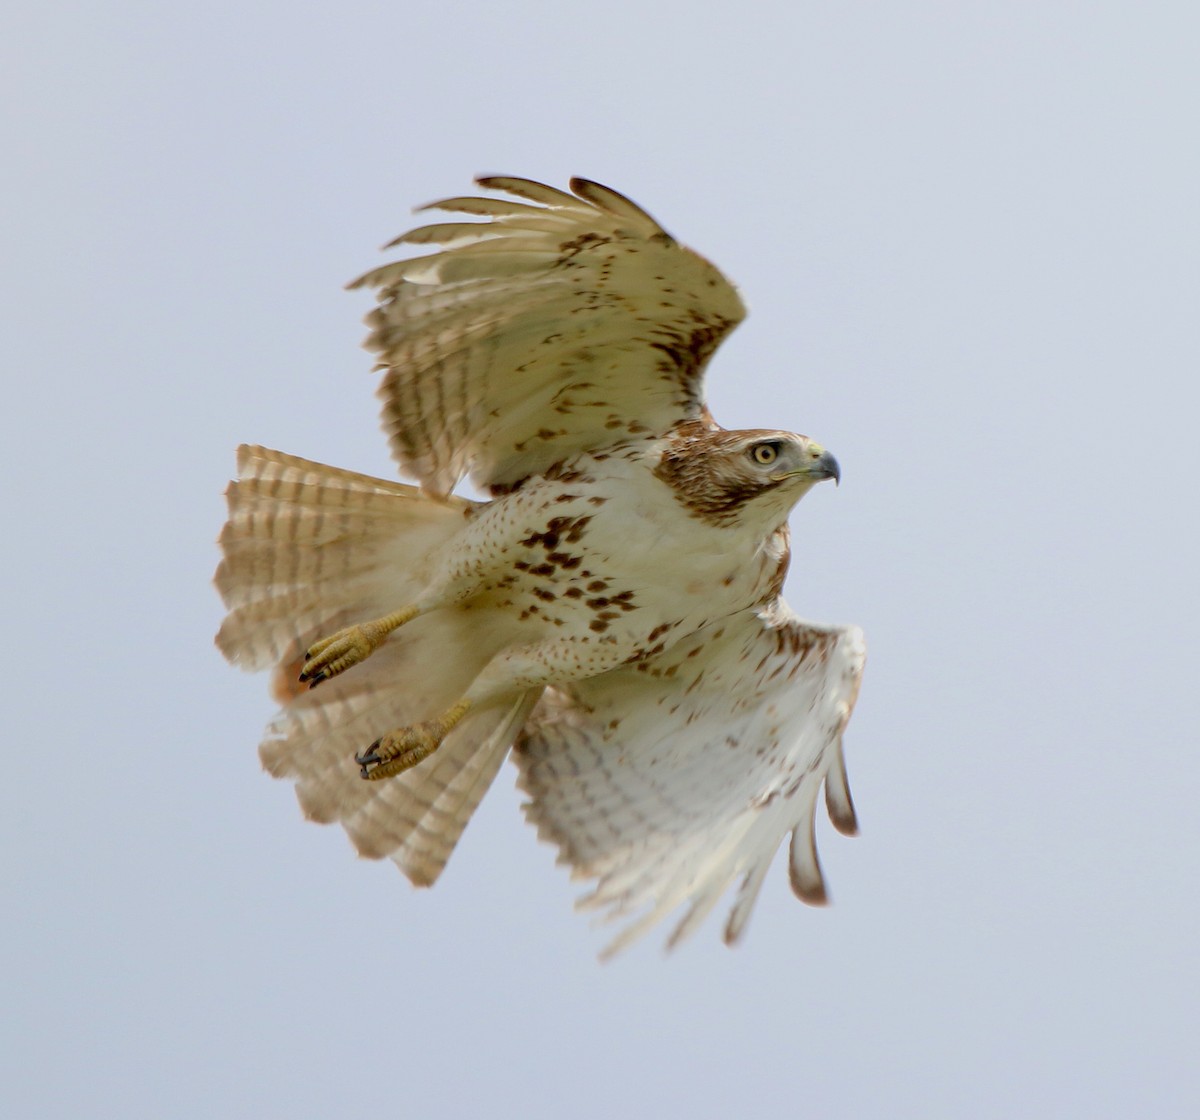 Red-tailed Hawk - Lori White